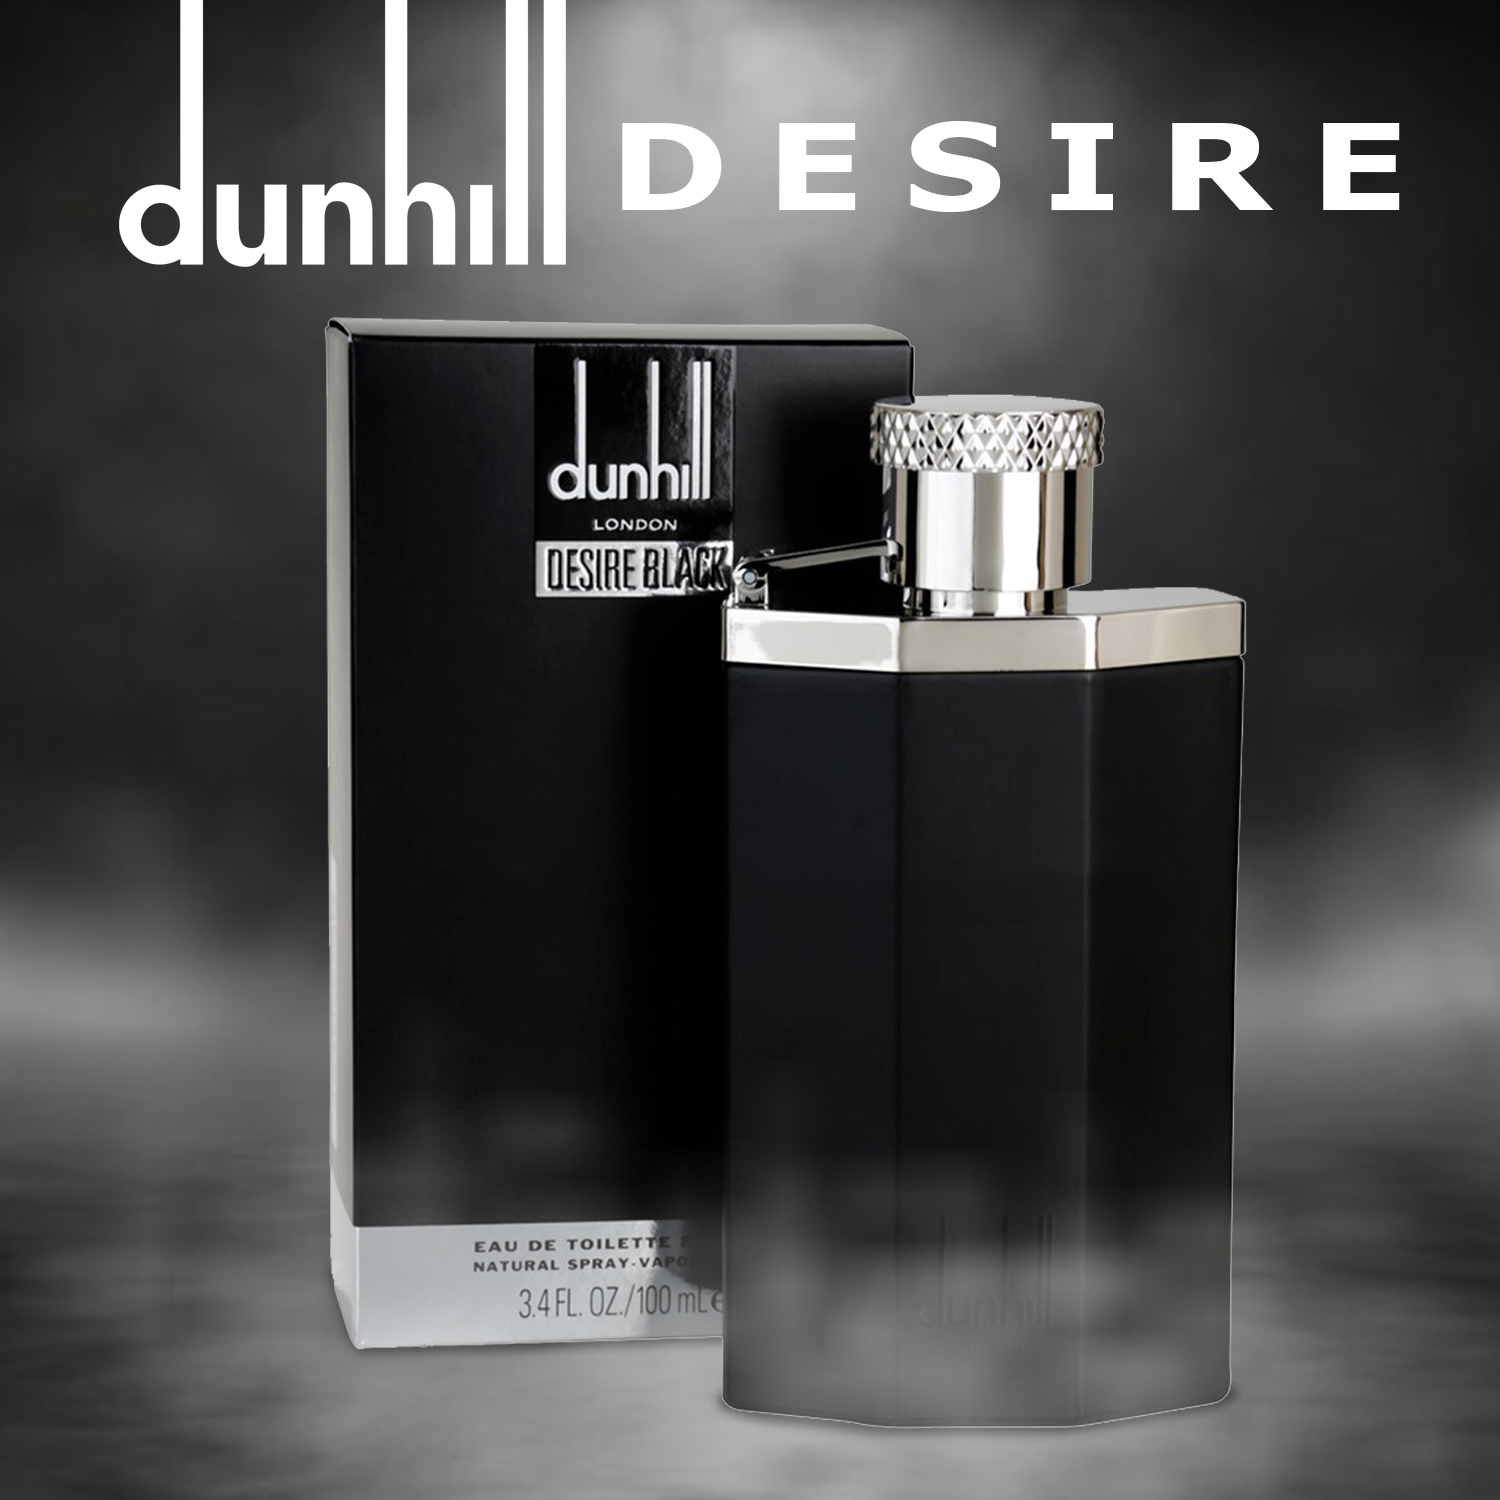 dunhill desire black 100ml price